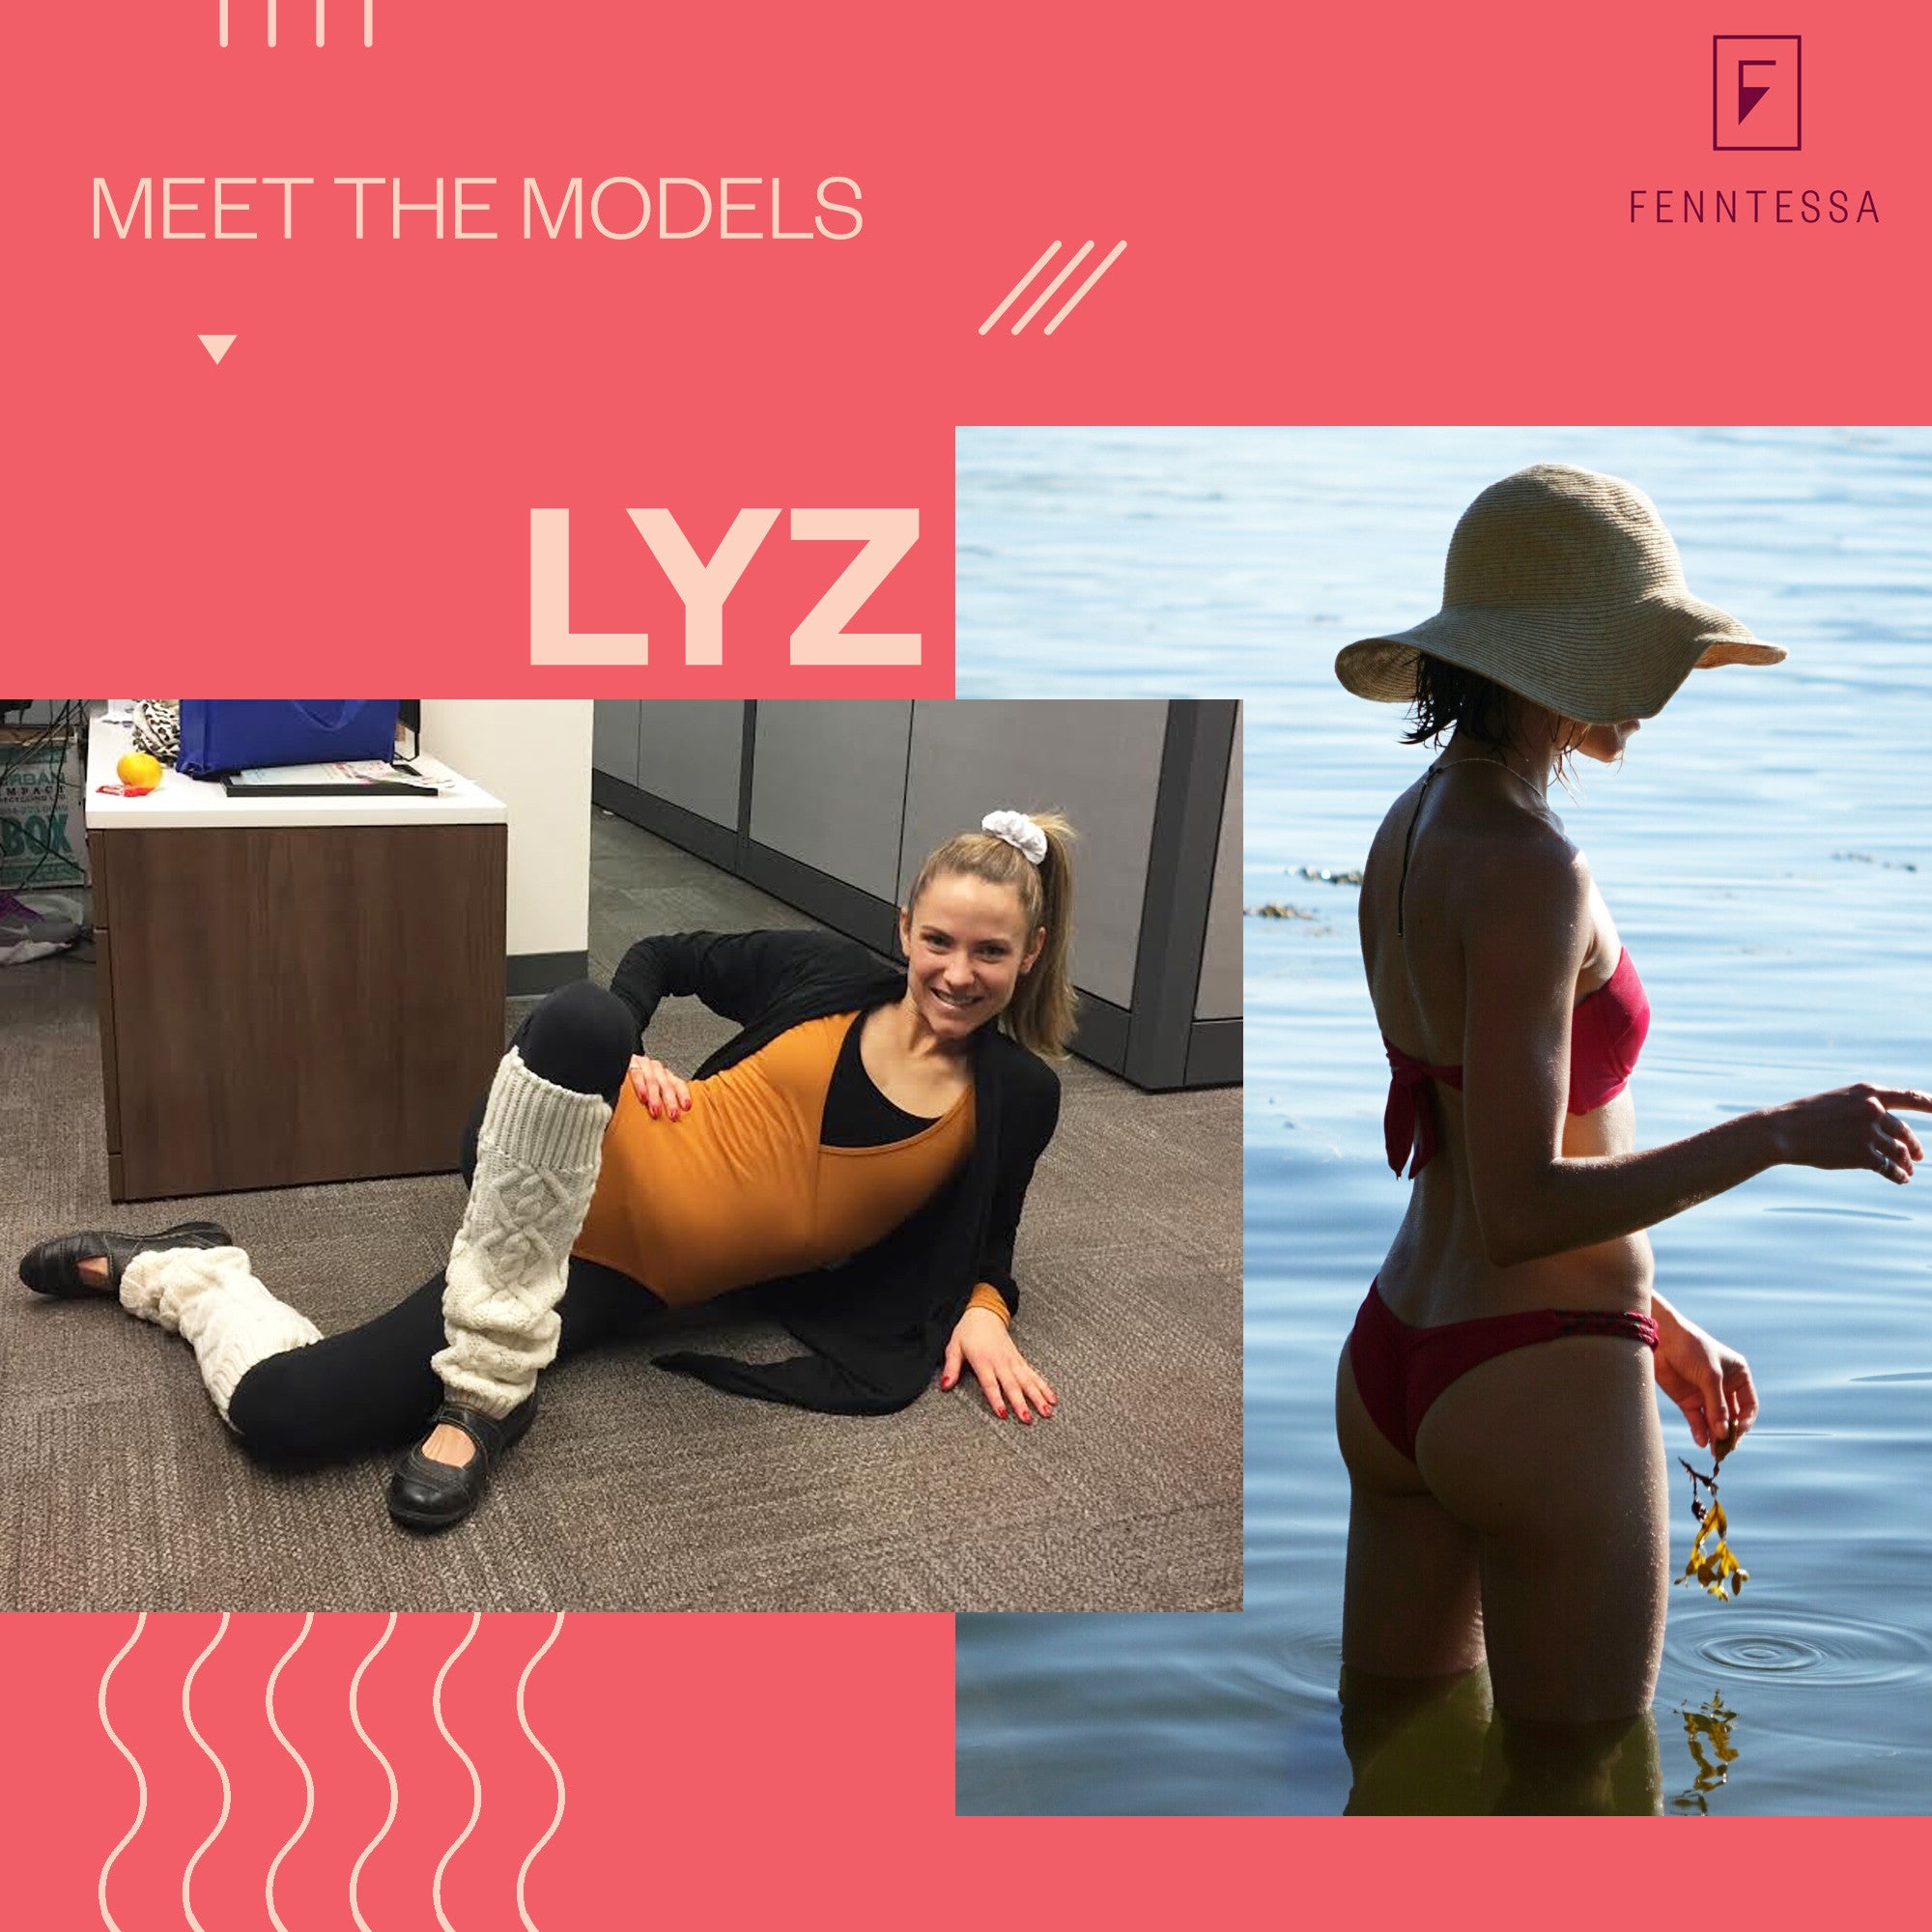 Meet Lyz